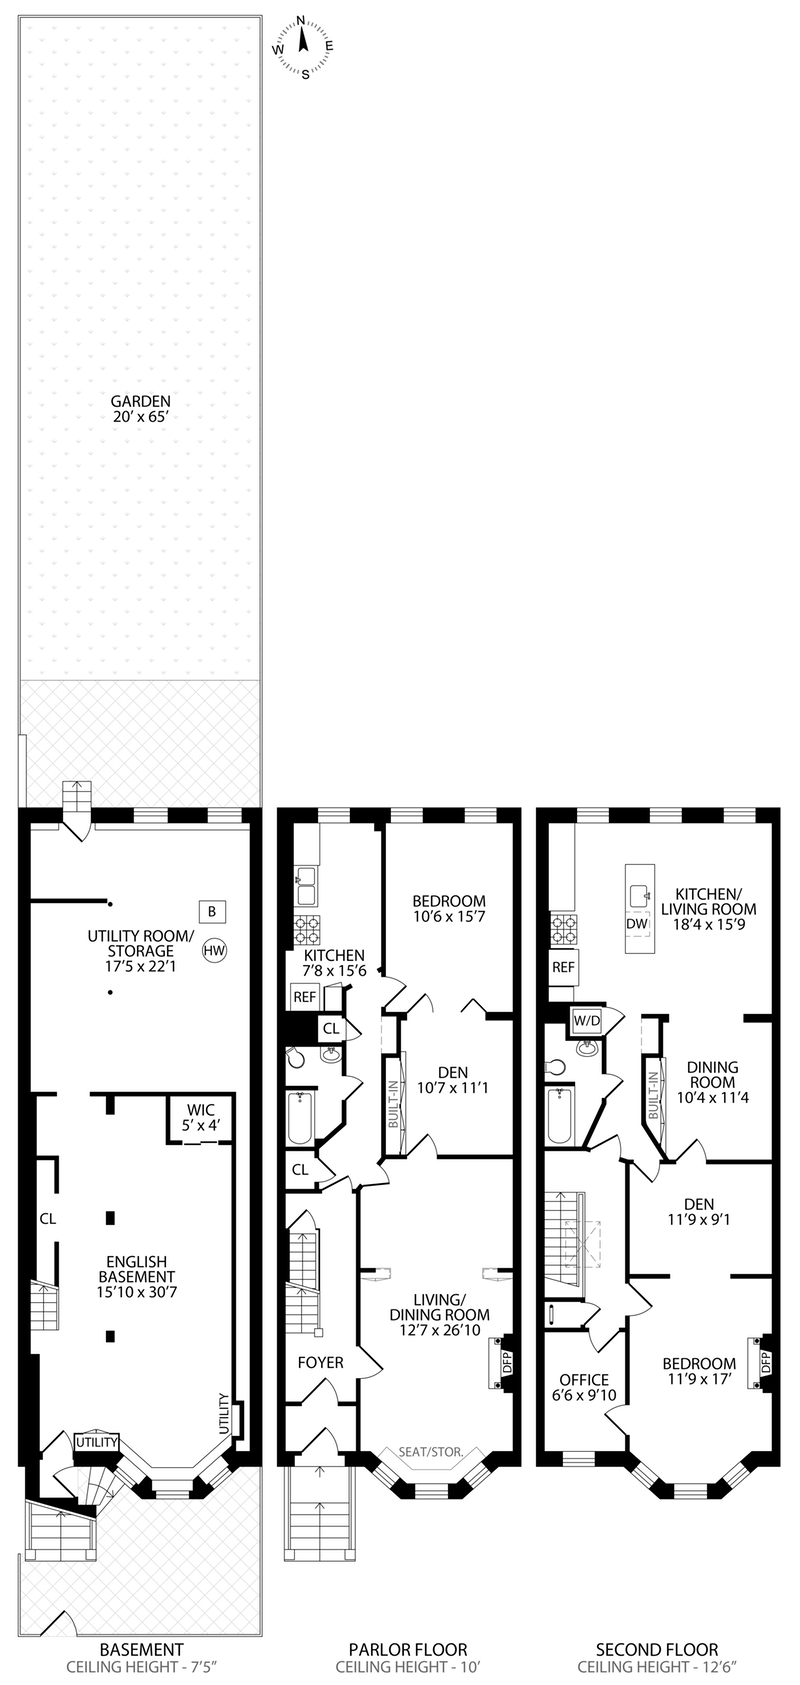 Floorplan for 1353 Park Place